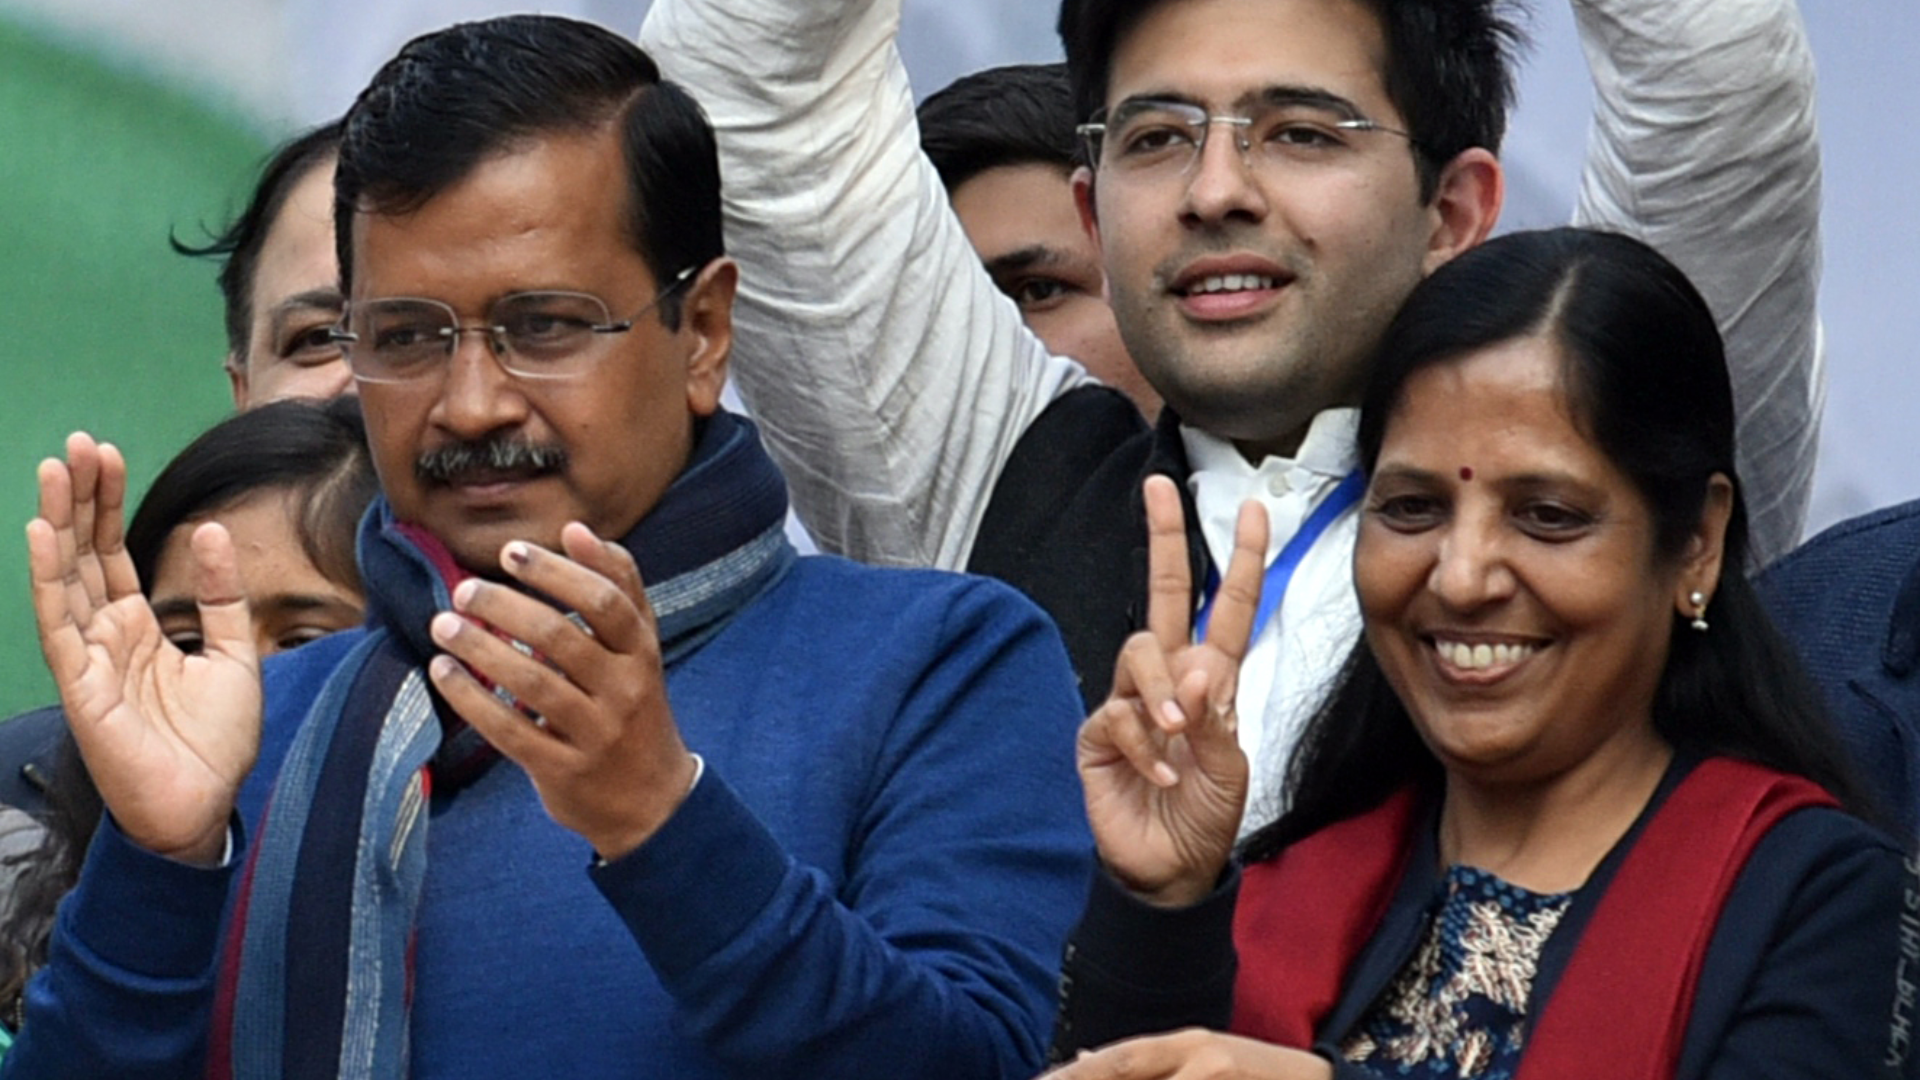 Sunita Kejriwal Breaks Silence, Condemns PM Modi’s ‘Arrogance Of Power’ Following His Arrest